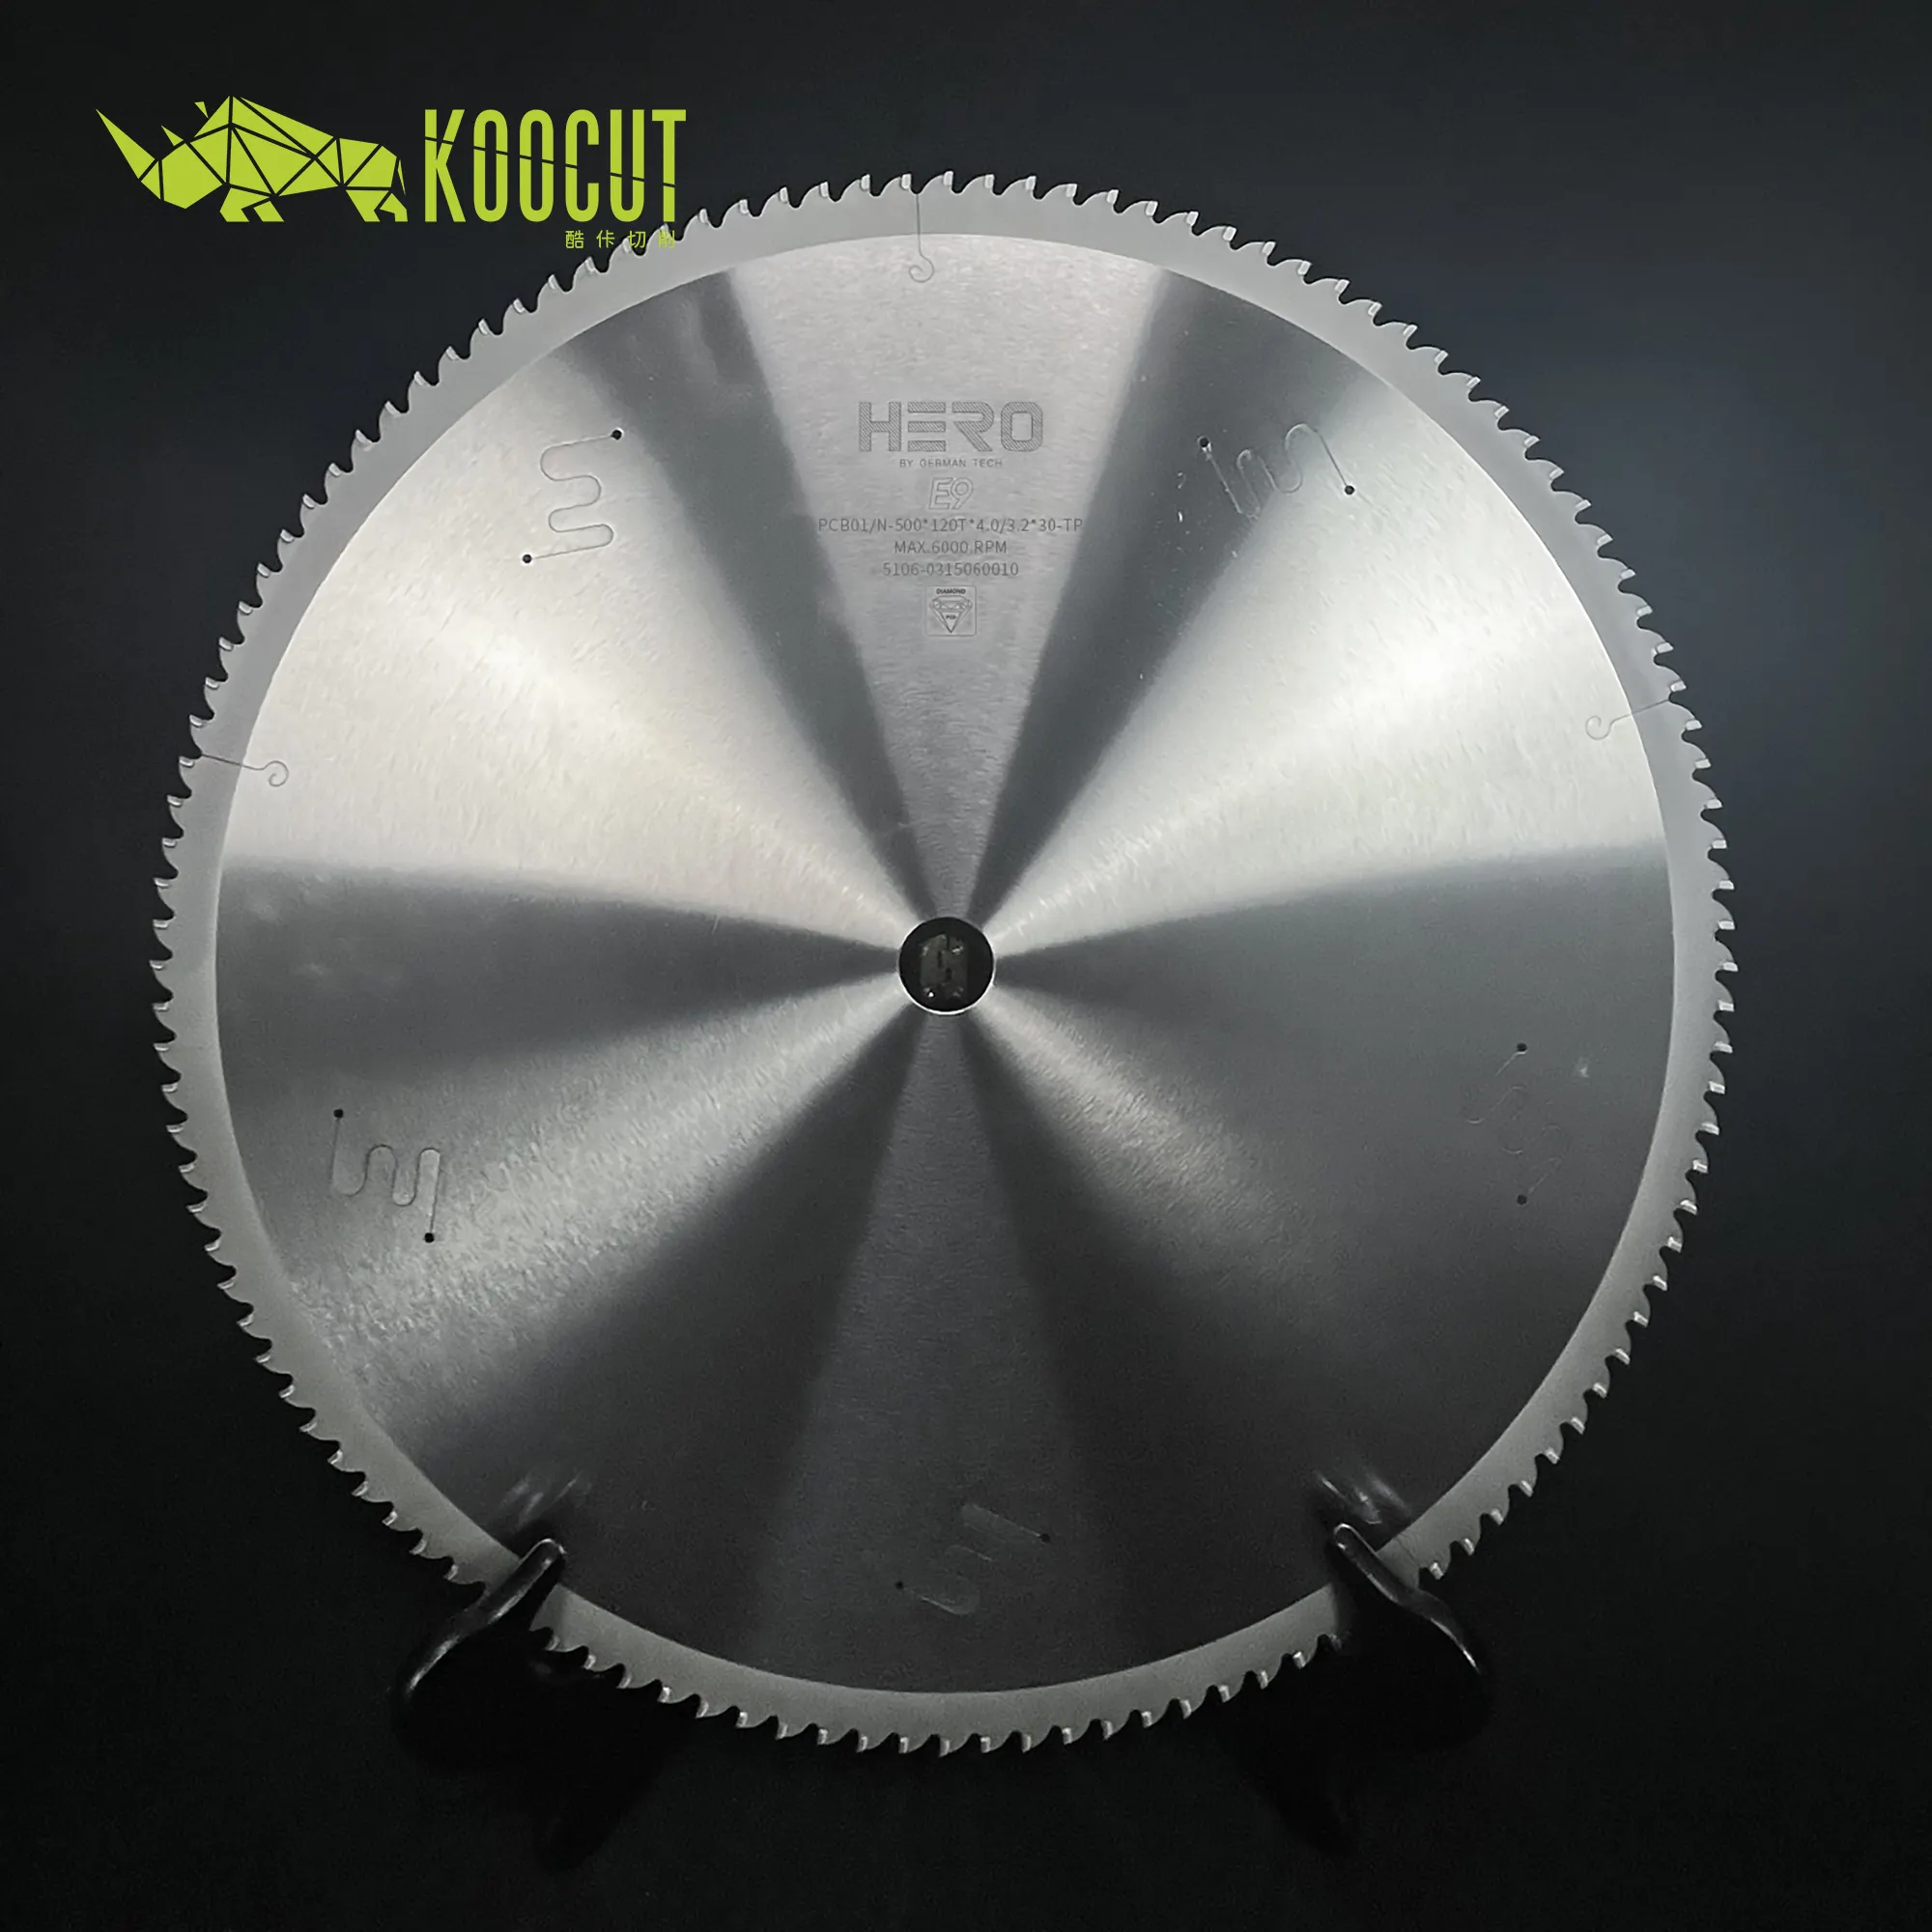 KOOCUT Factory Direct Selling 500mm PCD Kreissäge blatt zum Schneiden von Aluminium profilen